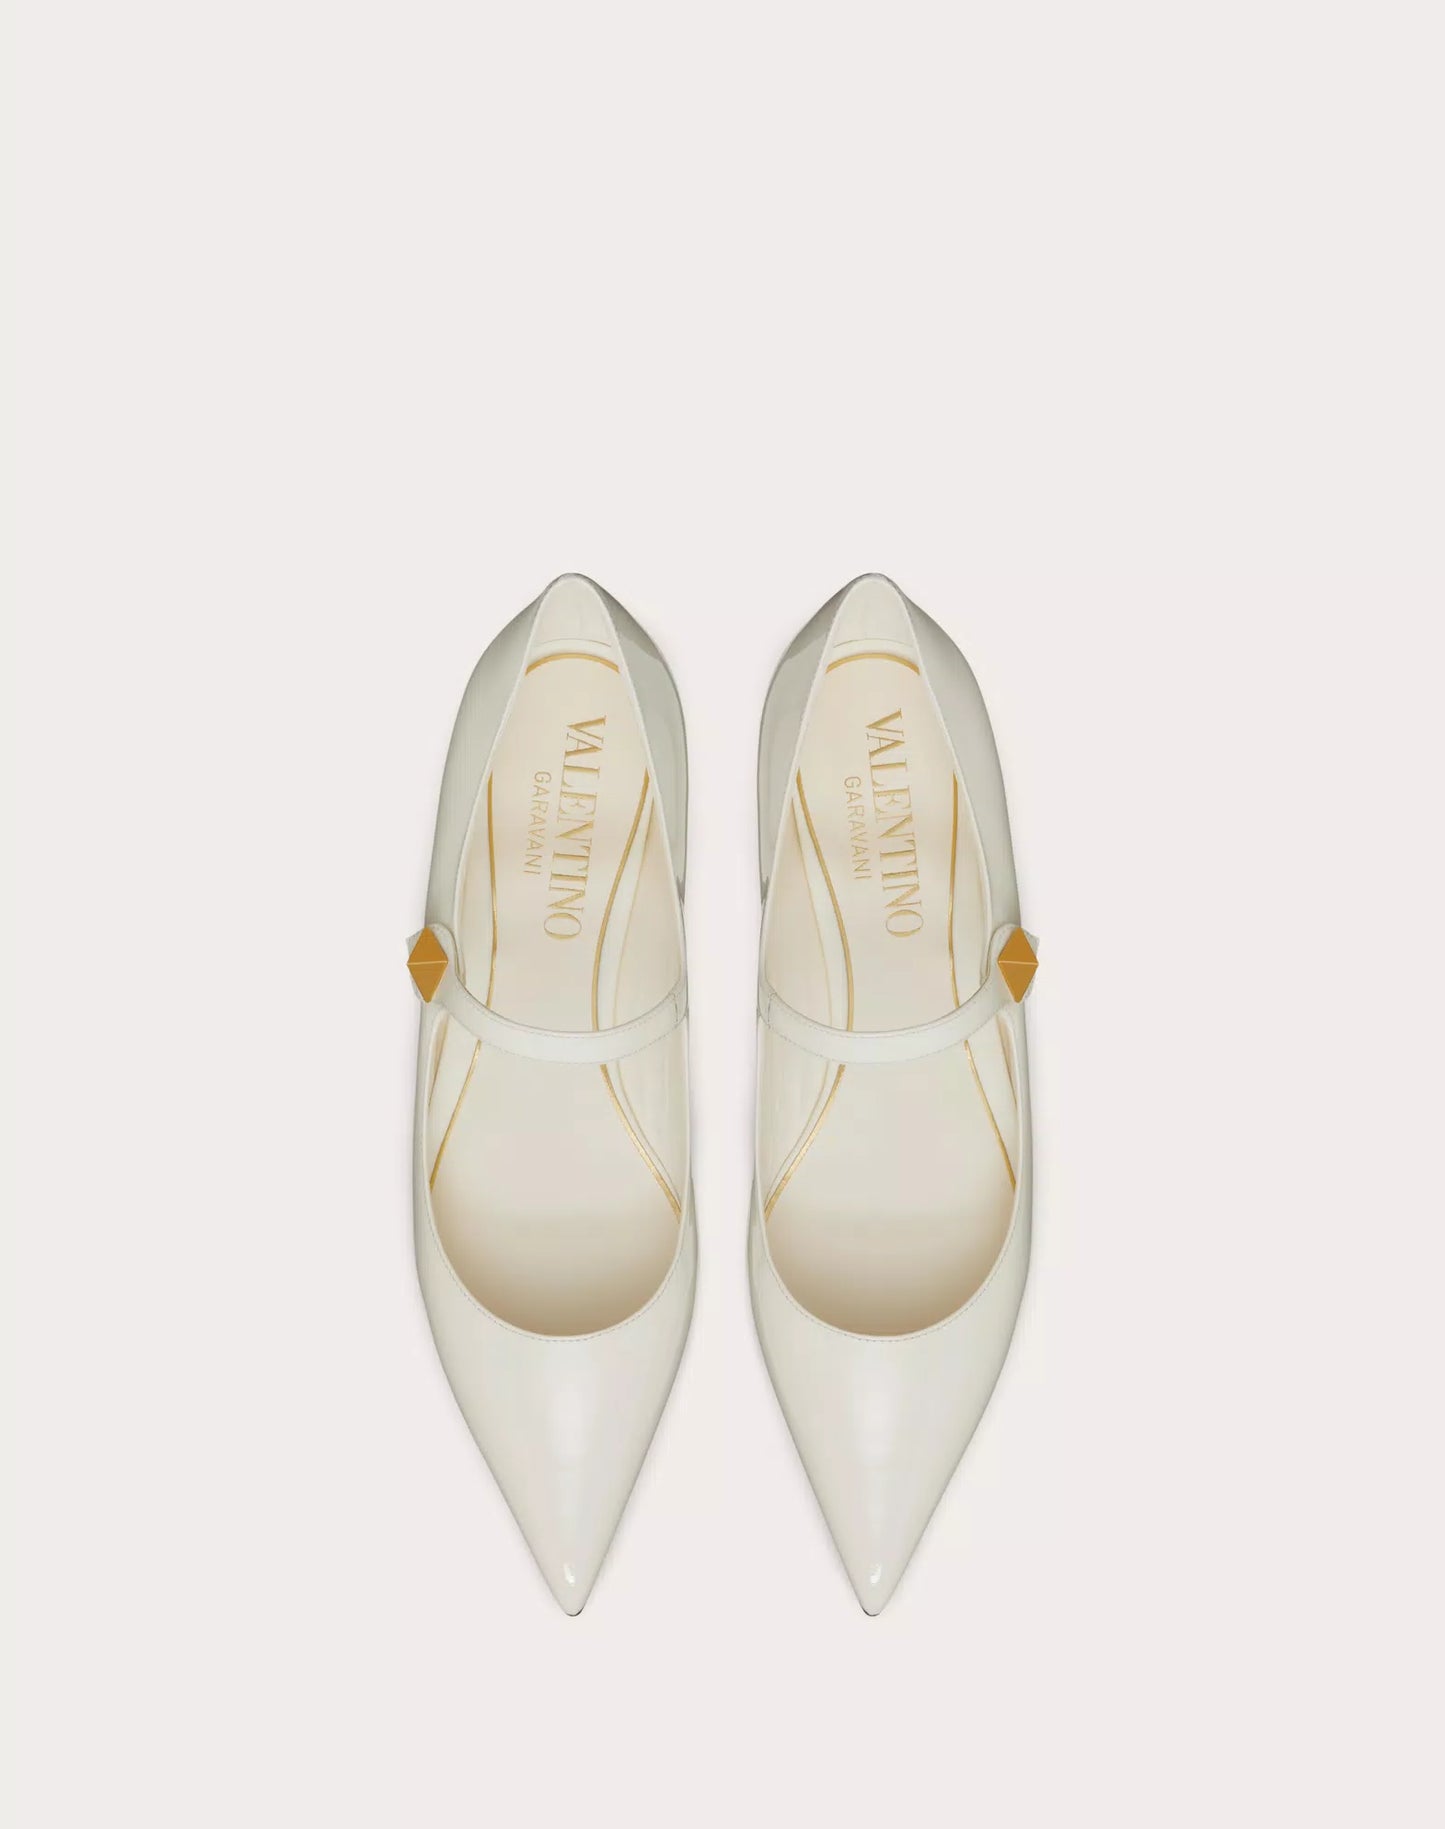 Tiptoe Patent Leather Ballet Flat - Ivory